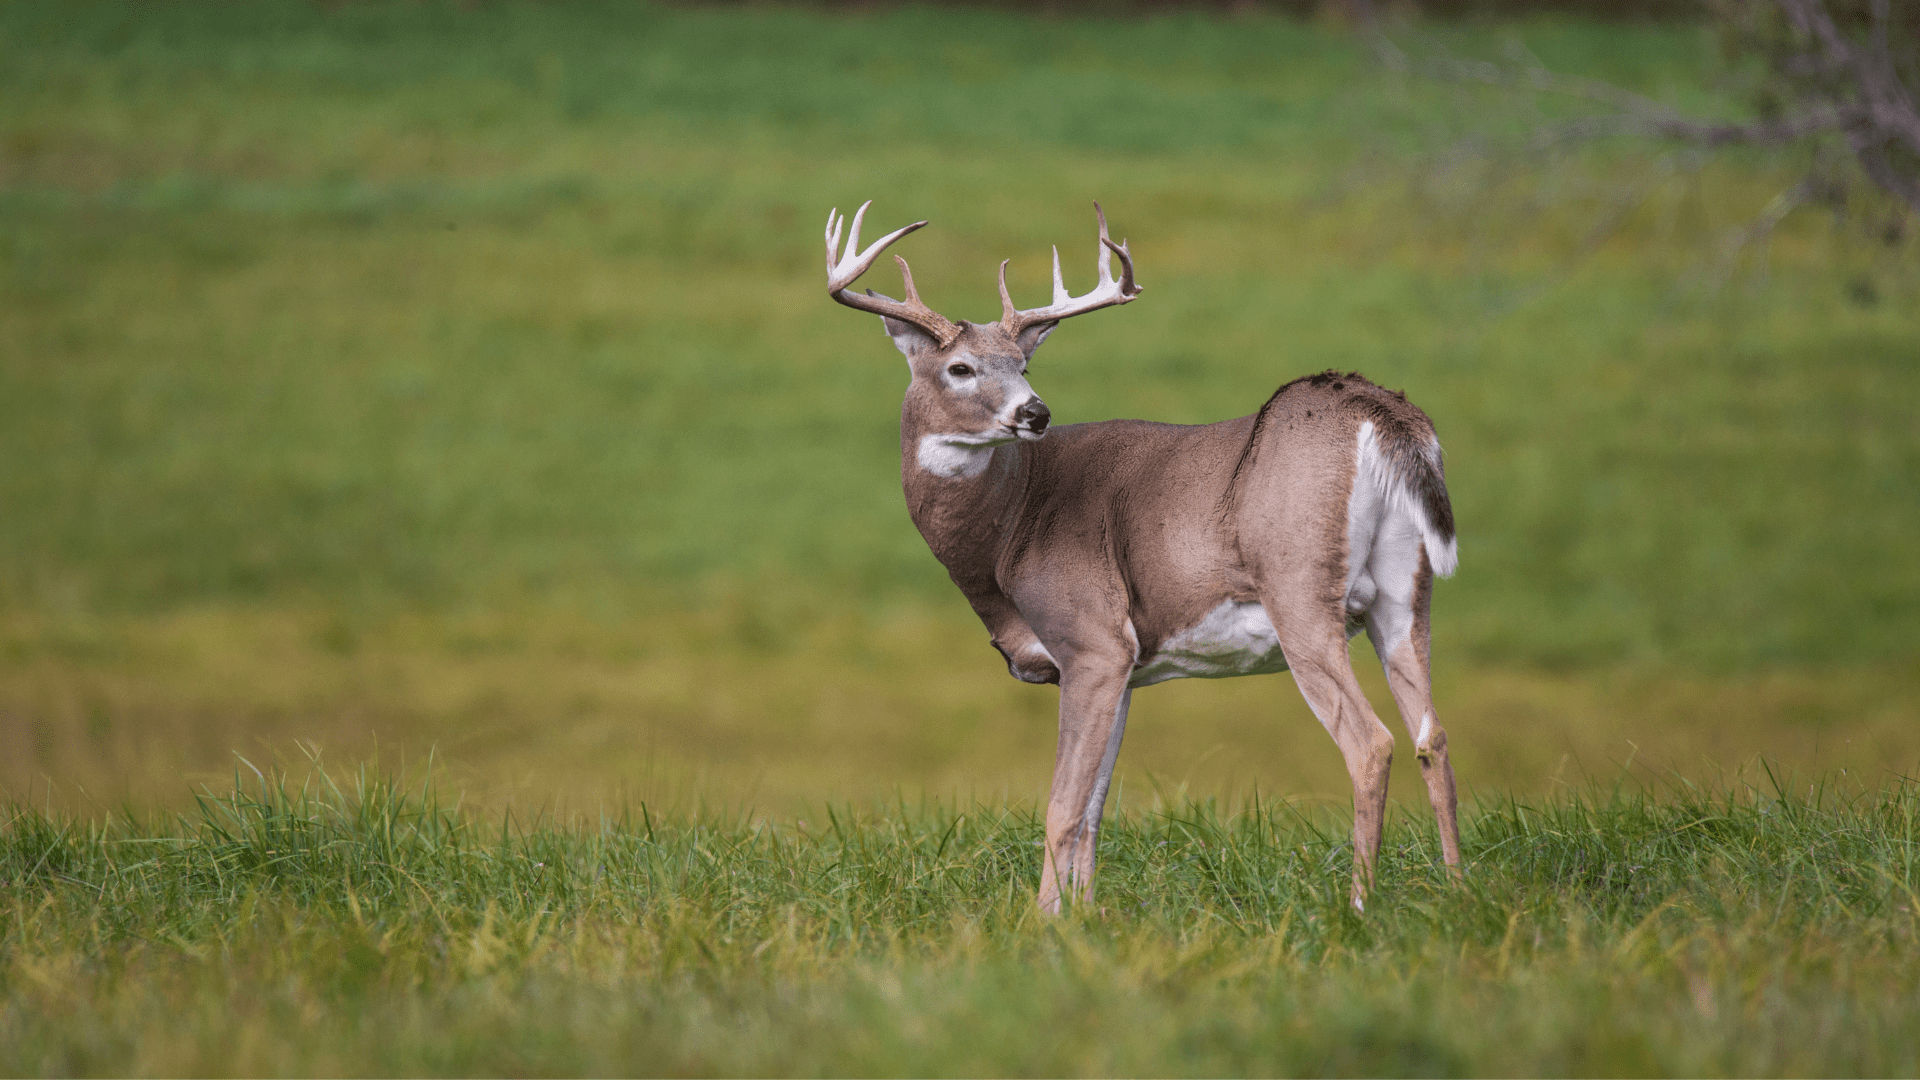 Featured image for “Delaware hunters harvest 15,000 deer, donate 100,000 meals”